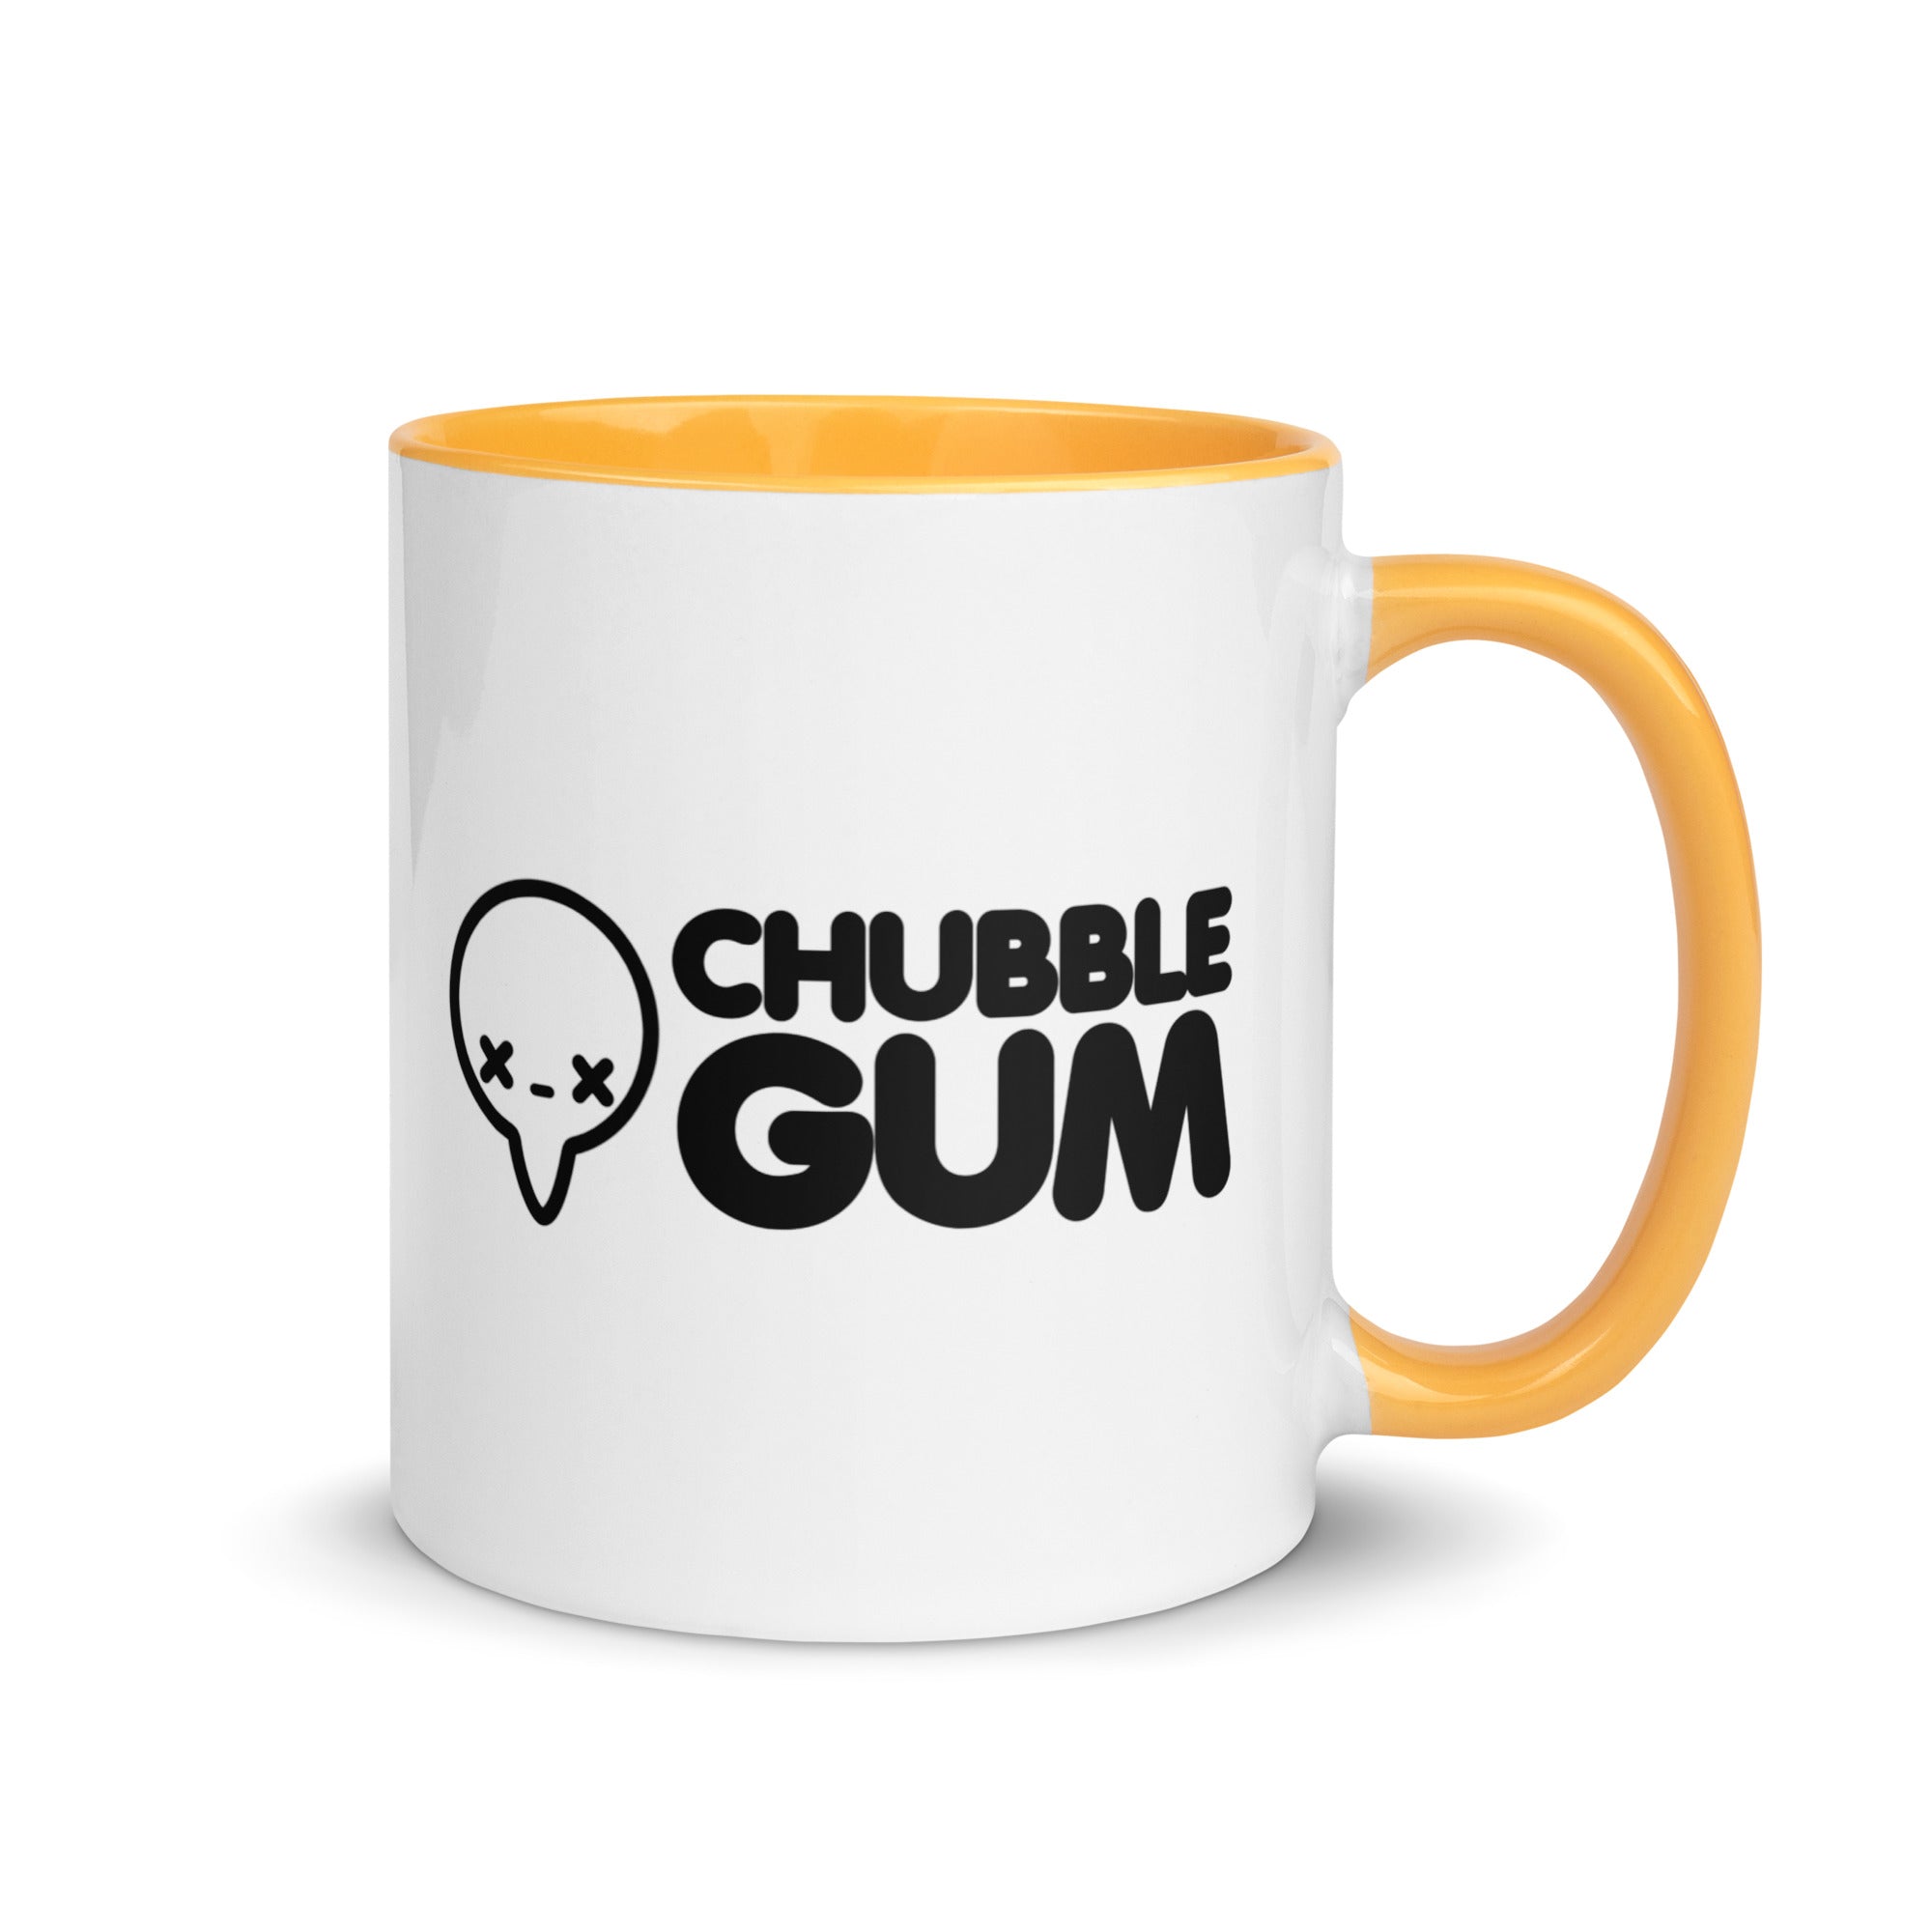 I SURVIVED A CRITICAL HIT - Mug With Color Inside - ChubbleGumLLC